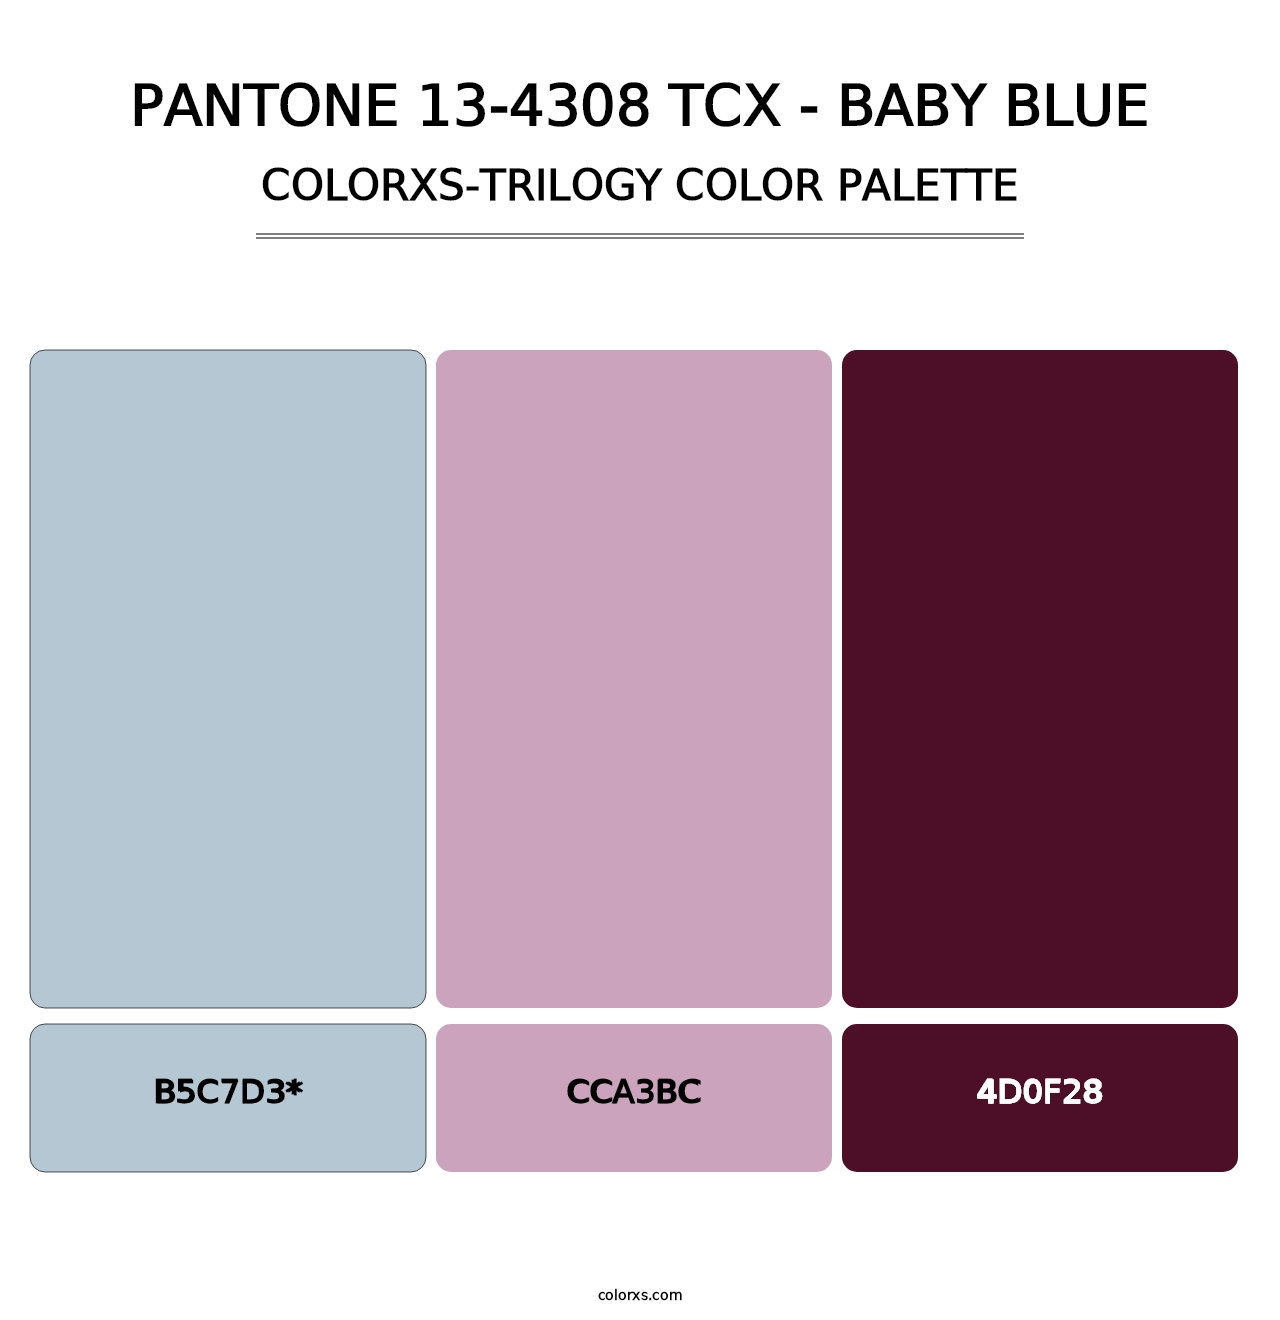 PANTONE 13-4308 TCX - Baby Blue - Colorxs Trilogy Palette